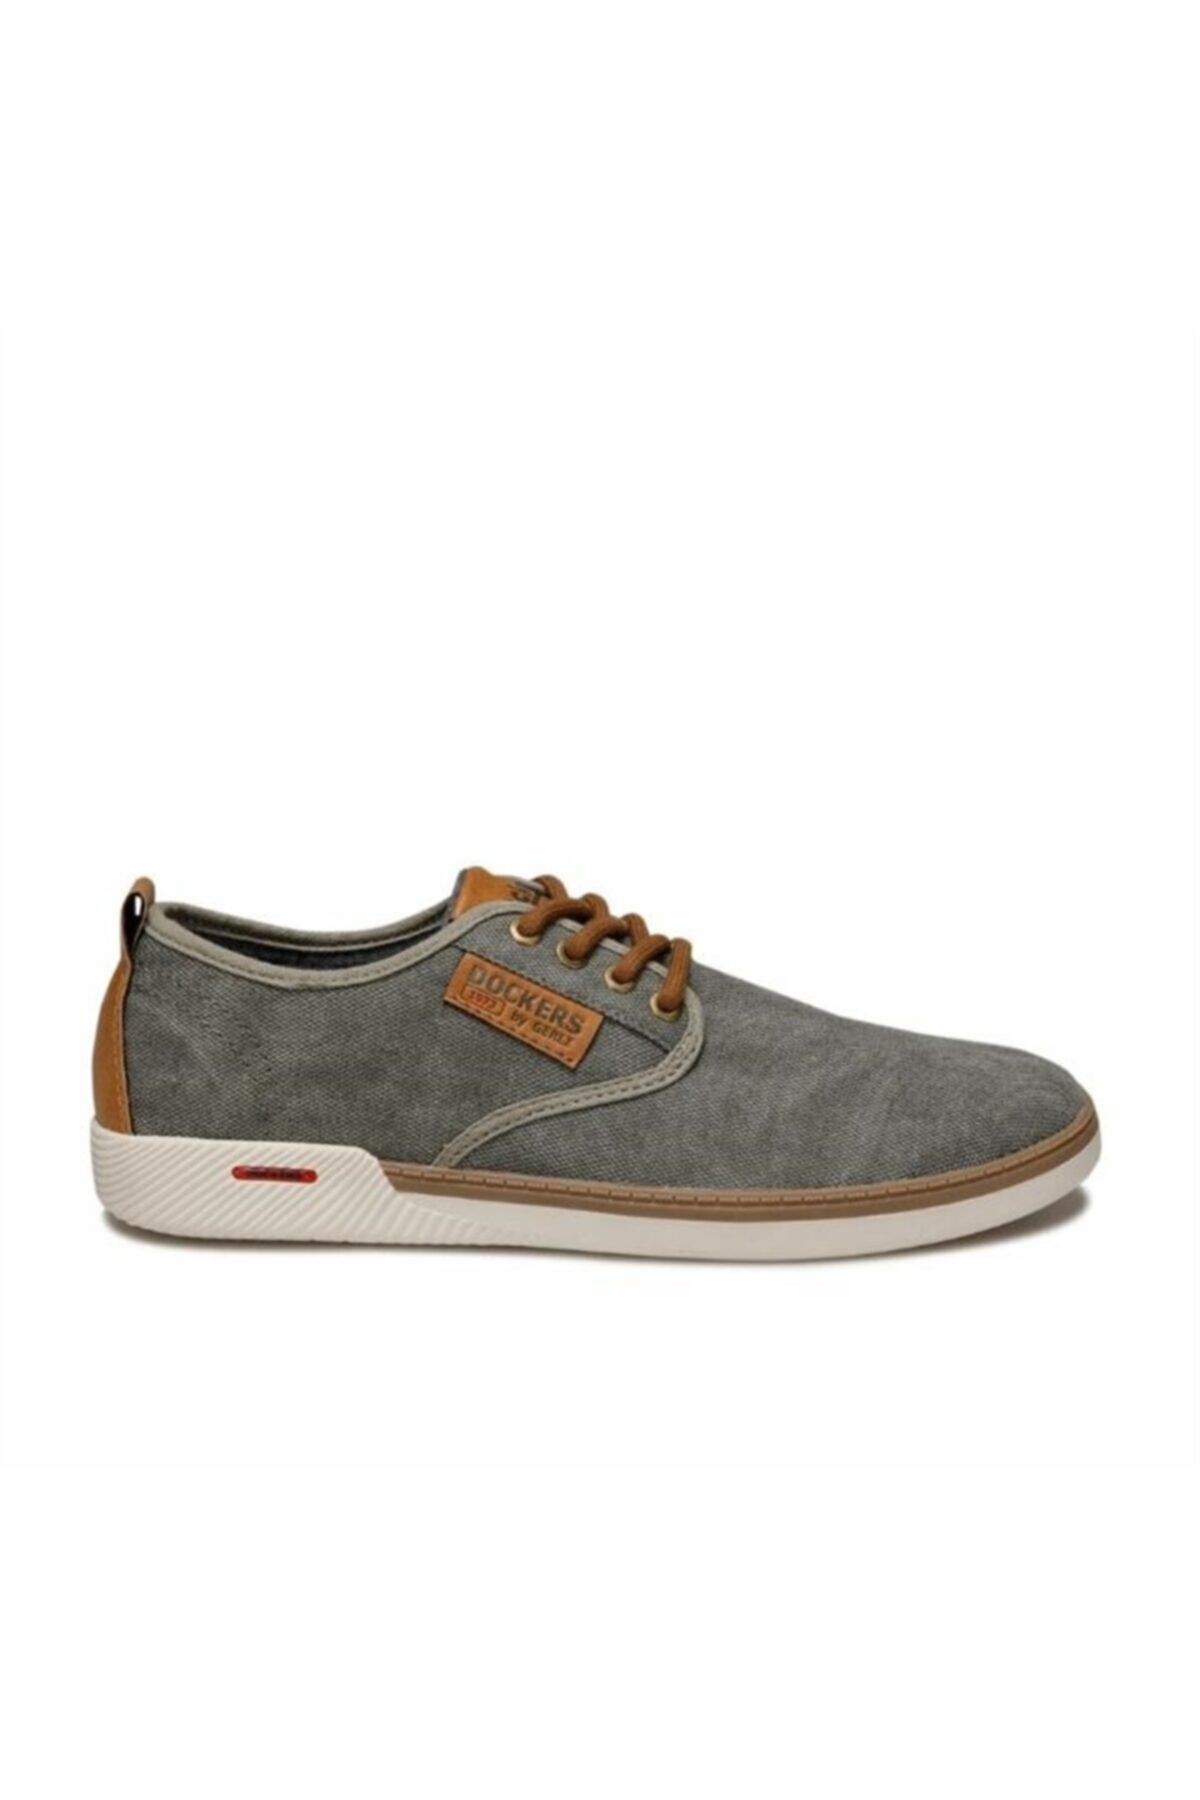 Dockers 228525 Haki Erkek Sneaker